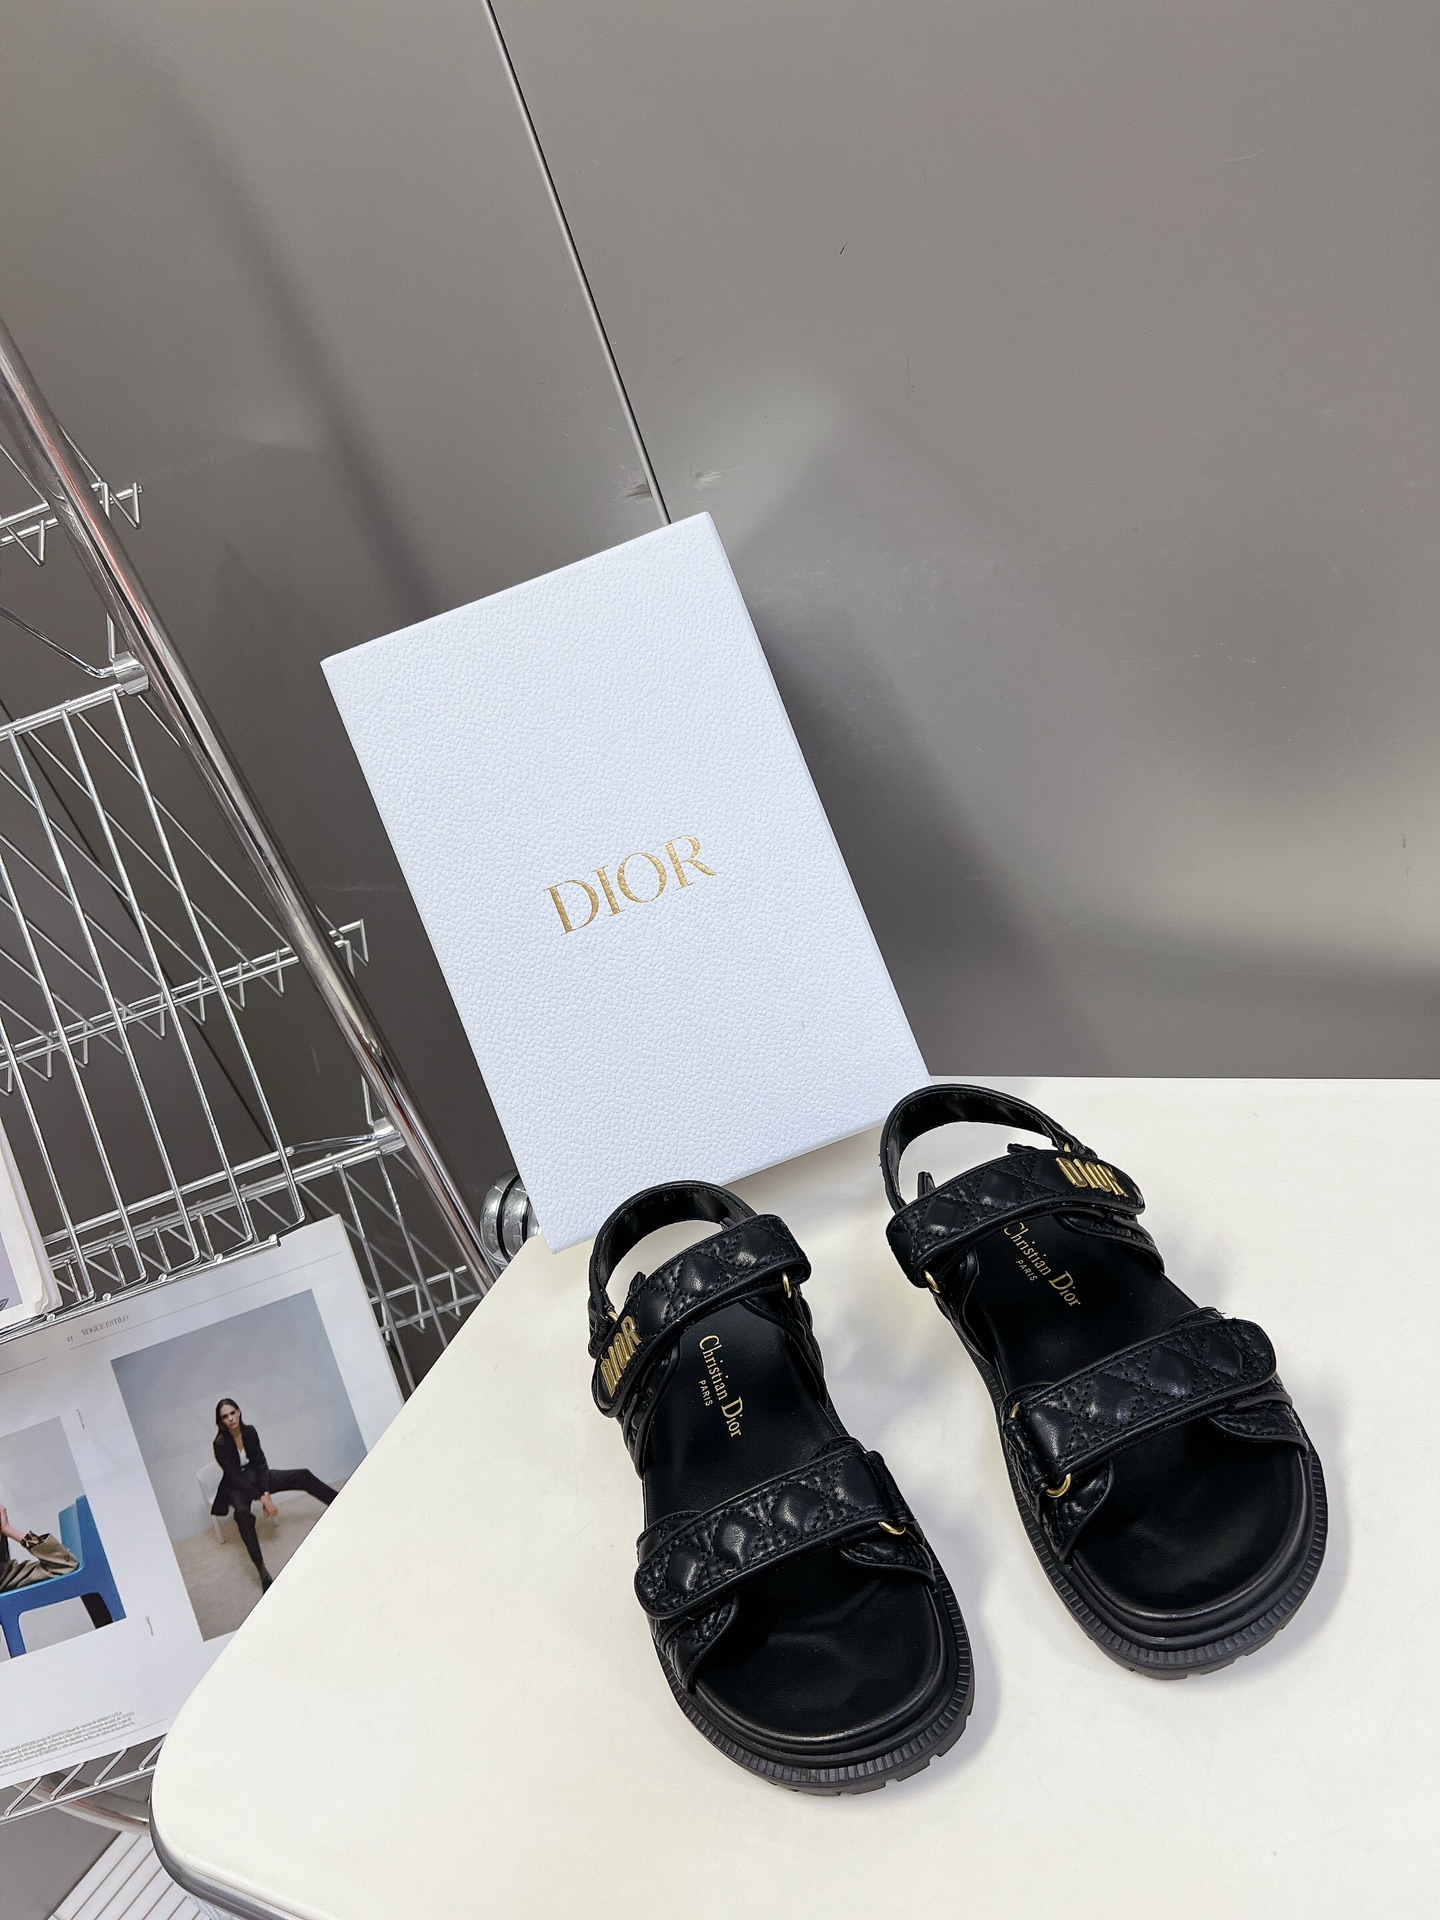 Peydjy   Dior 春夏最新款魔术贴凉鞋、超多明星网红种草、经典的版型设计➕上迪奥LOGO五金点缀、超好看超百搭、上脚非常柔软✔️鞋面进口电绣，内里羊皮里、正品开模TPU大底 码数：35-41